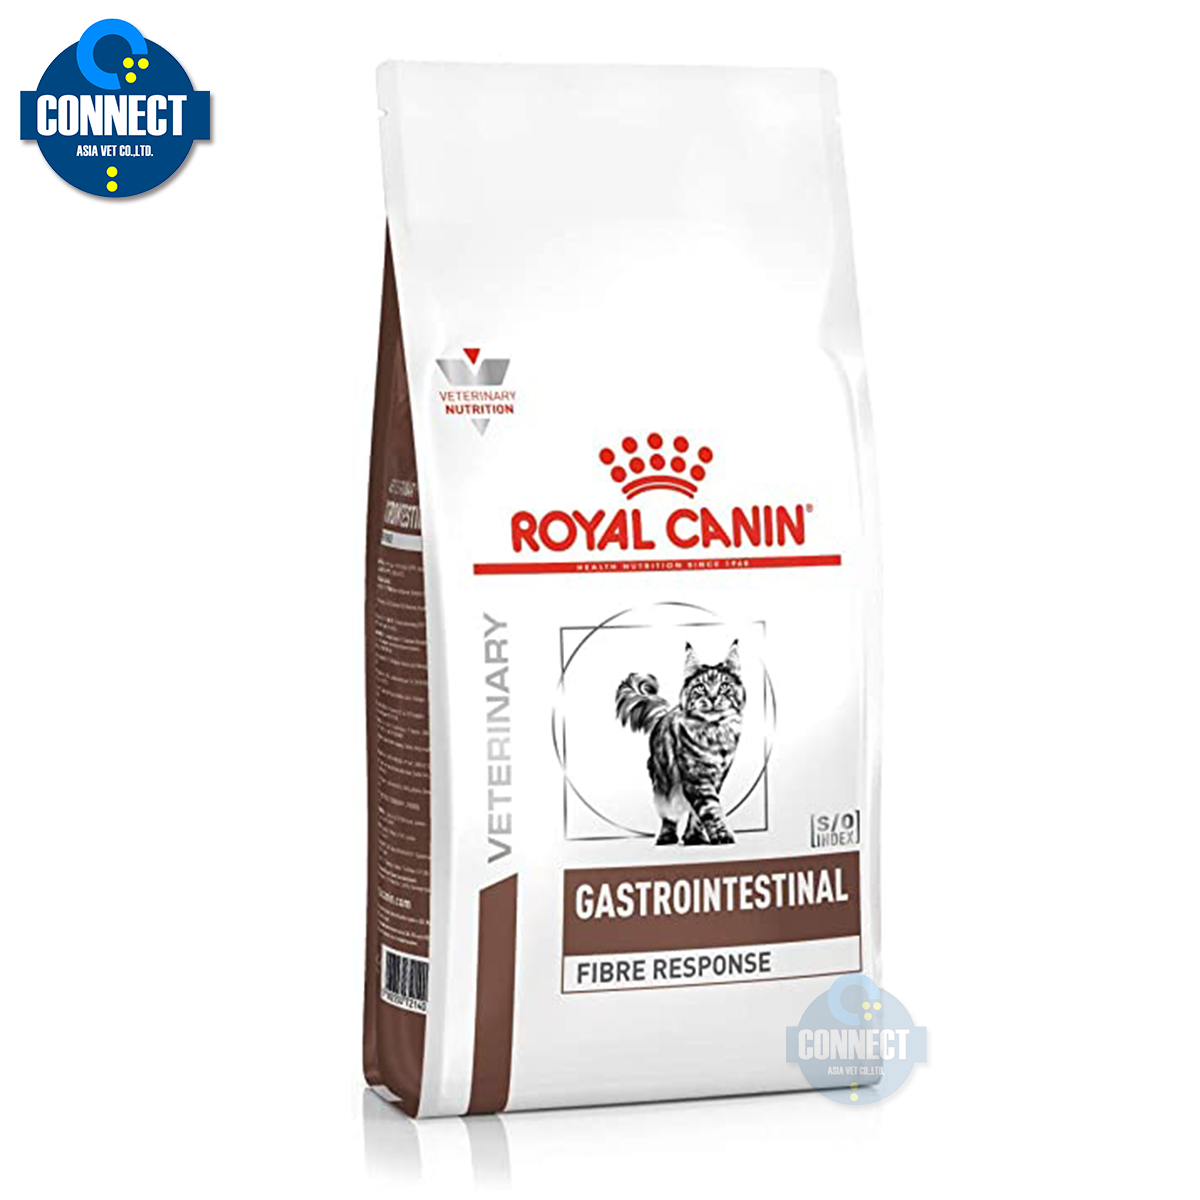 Royal Canin Gastrointestinal Fibre Response ขนาดถุง 2 กิโลกรัม.